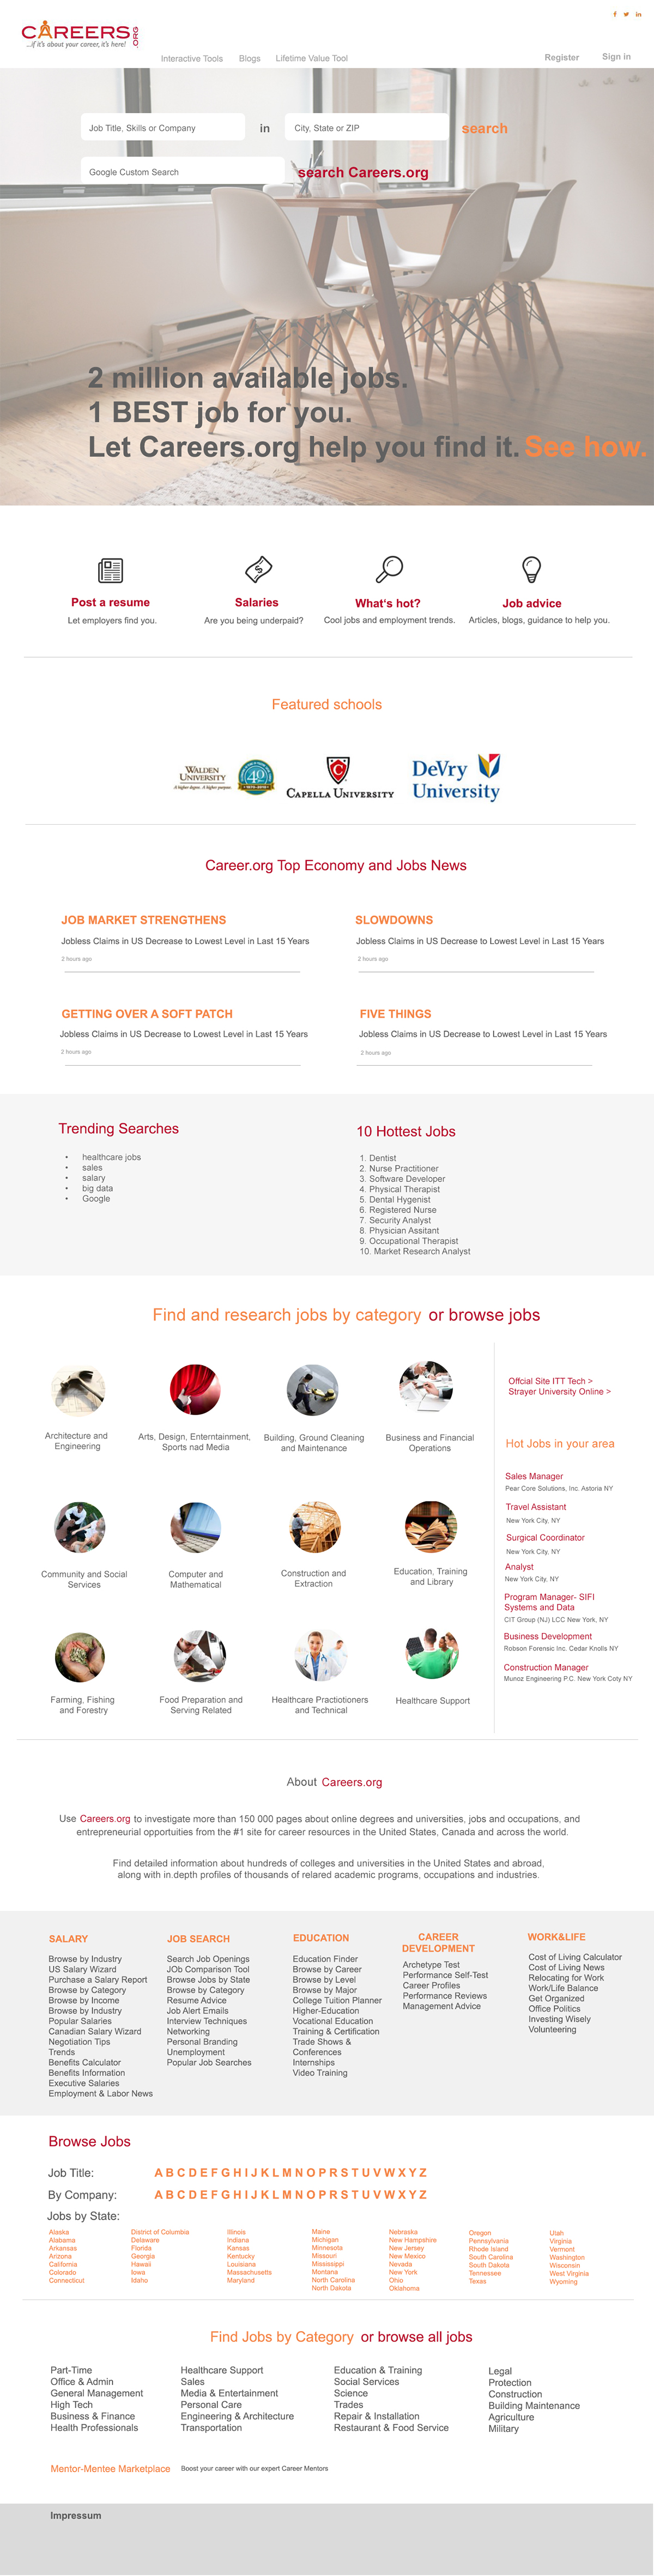 photoshop Web template job search engine